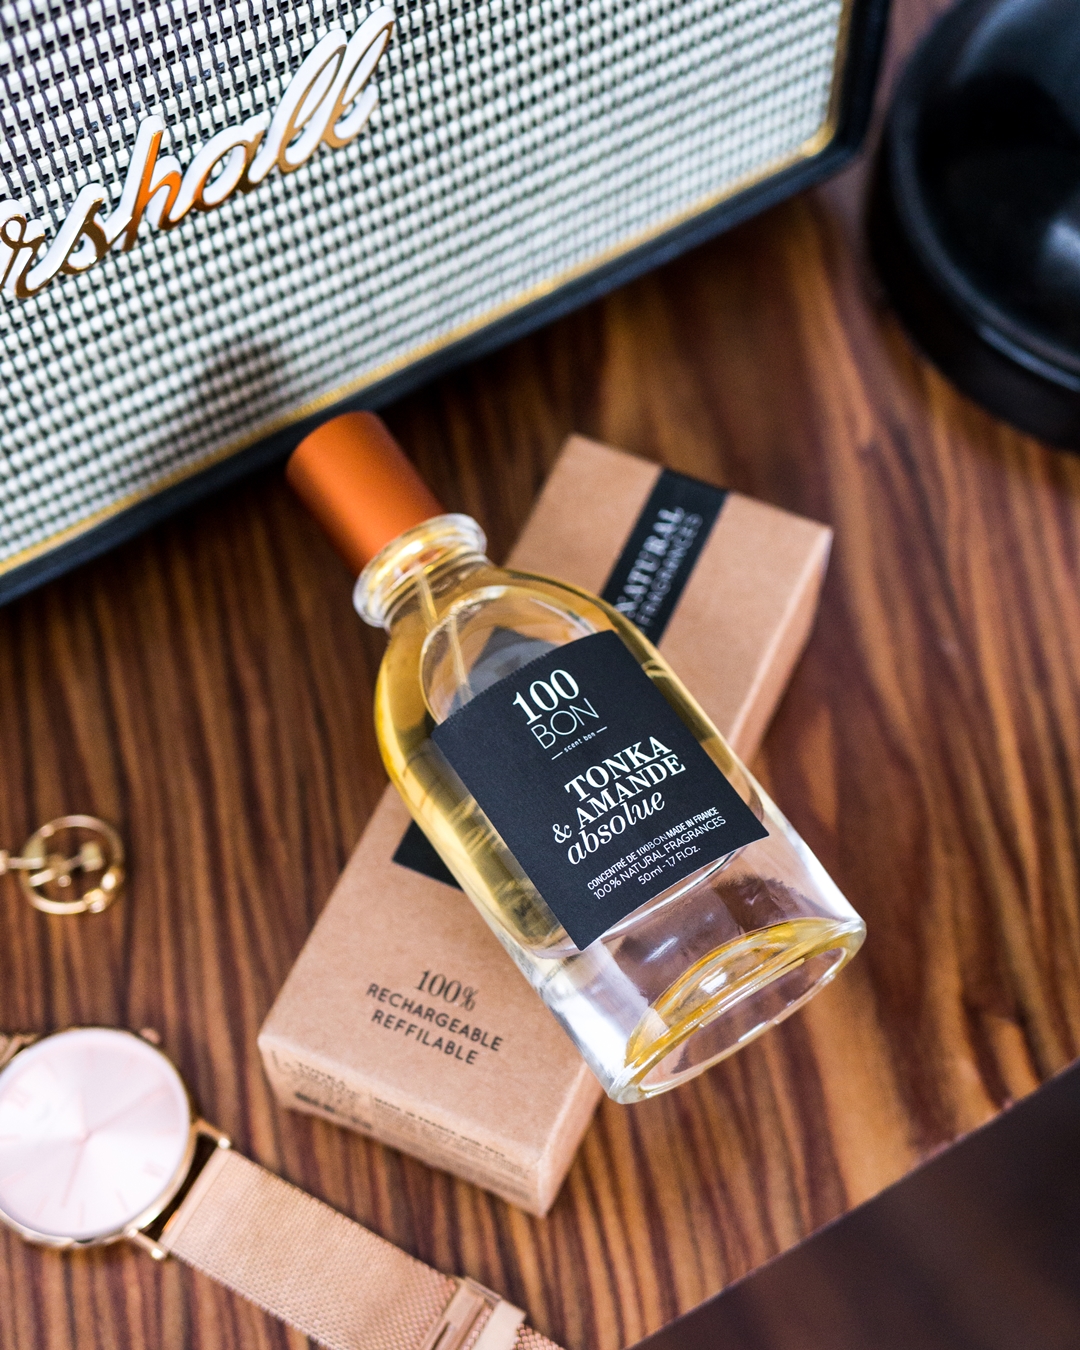 100 BON, czyli w 100% naturalne perfumy | Tonka & Amande Absolue 